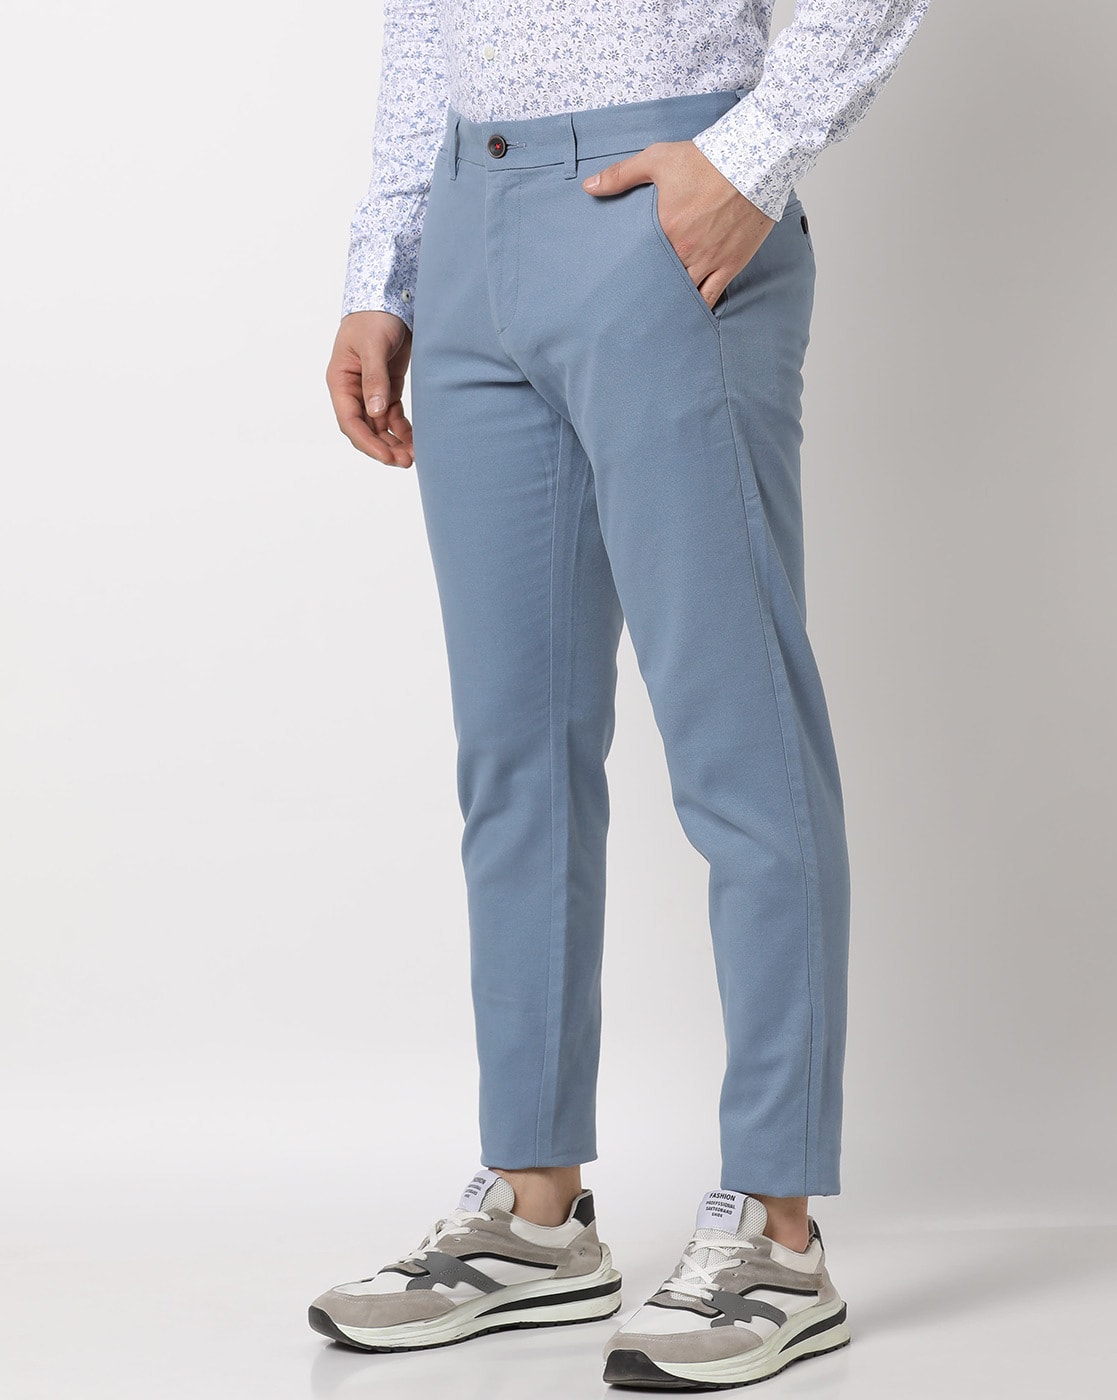 Buy Grey Trousers  Pants for Men by Giordano Online  Ajiocom